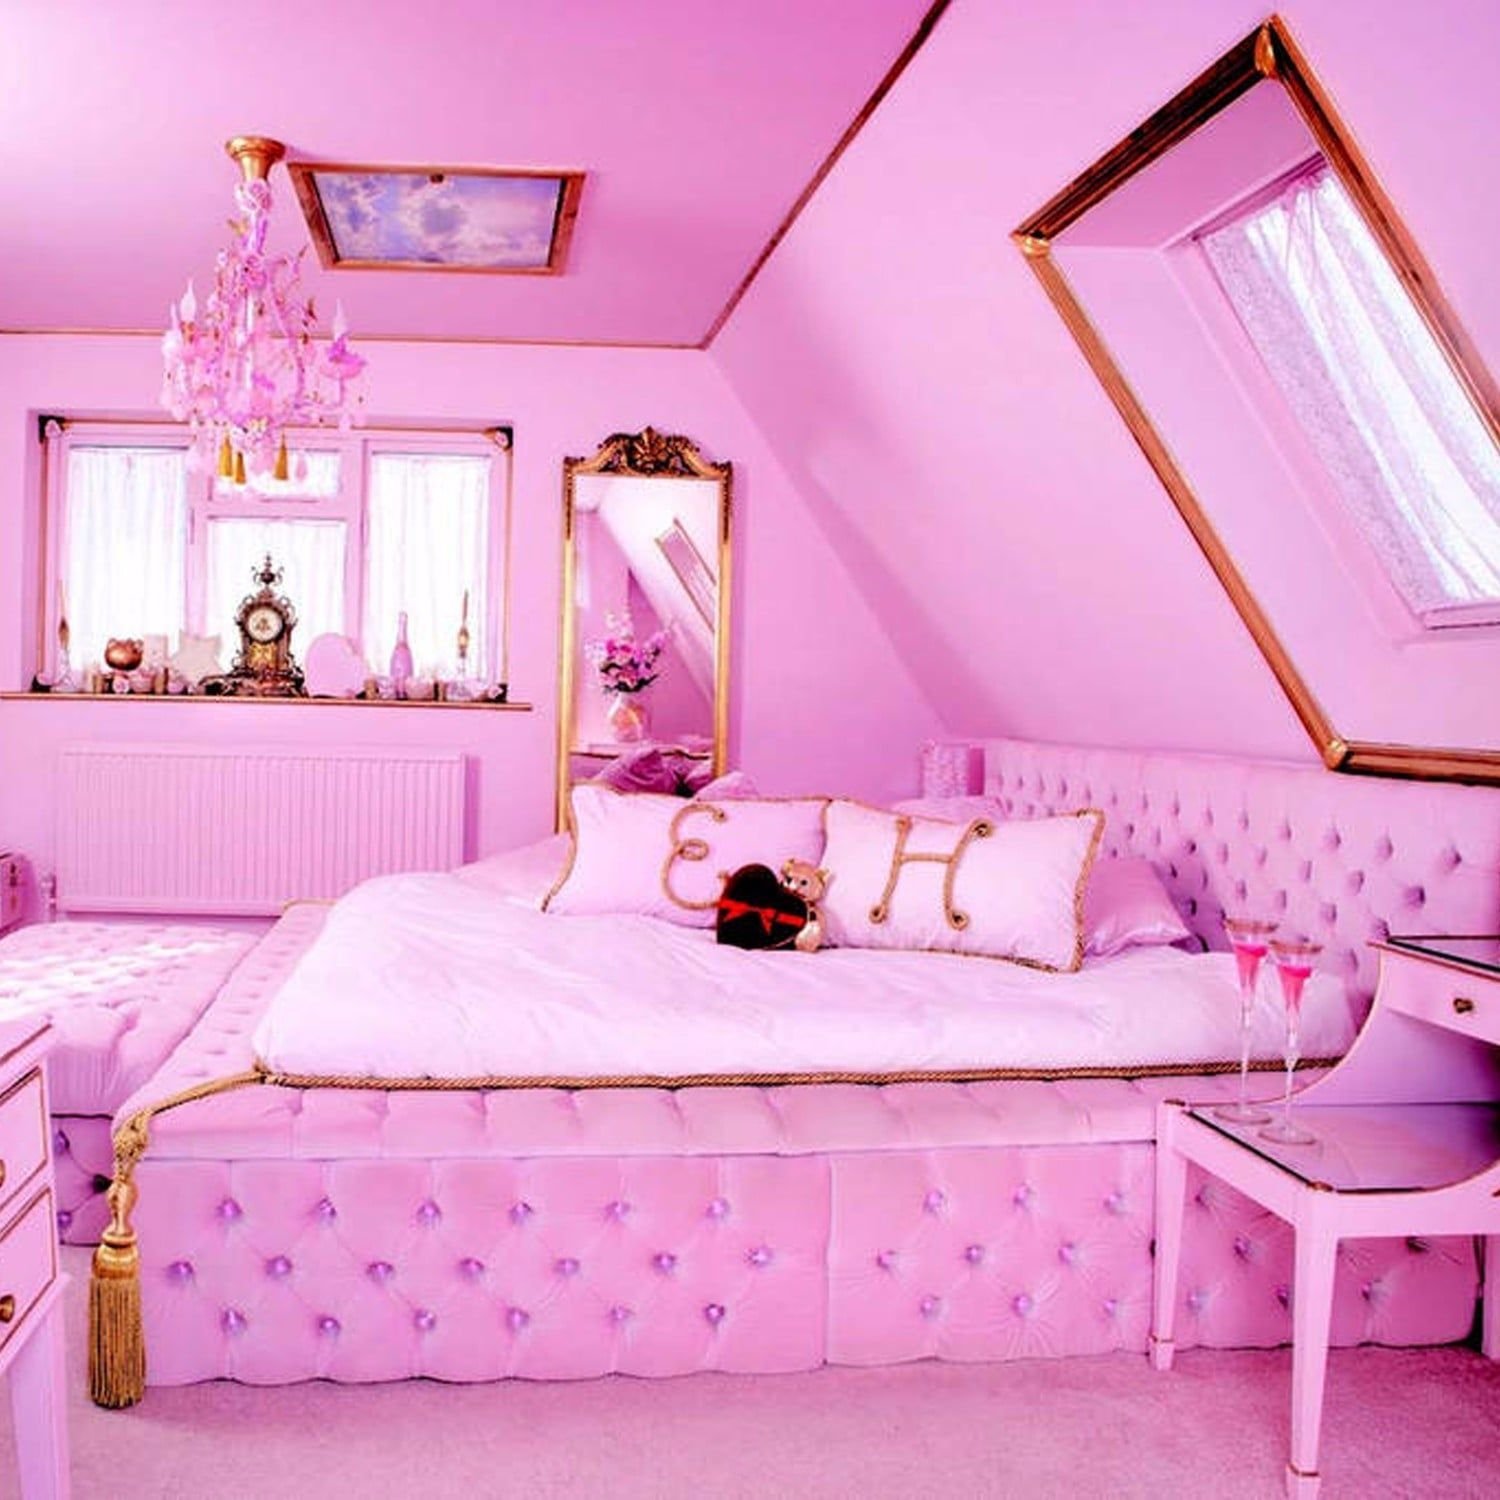 Комната в розовых тонах. Шикарная комната для девочки. Комната в розовом цвете. Спальня в розовом цвете. Розовая комната для девочки.